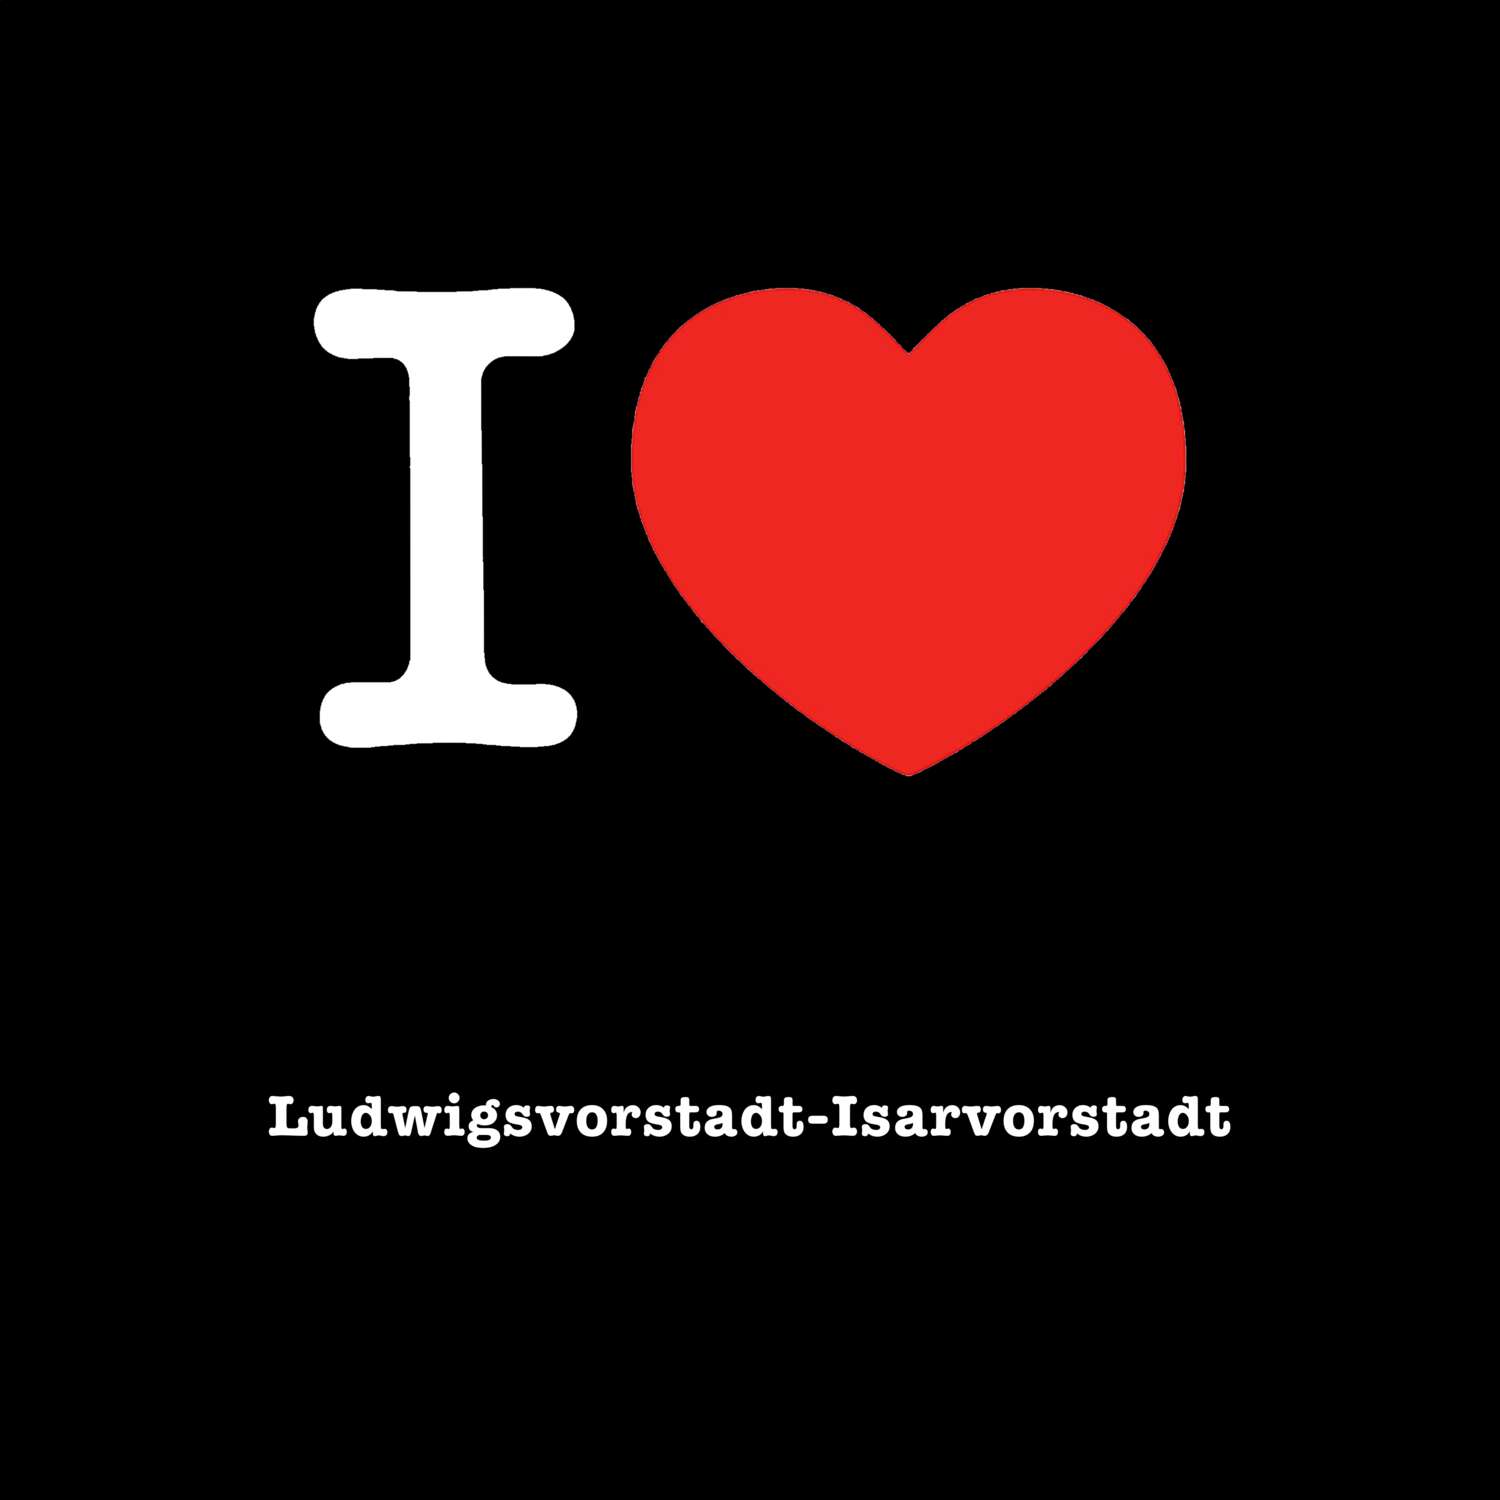 Ludwigsvorstadt-Isarvorstadt T-Shirt »I love«